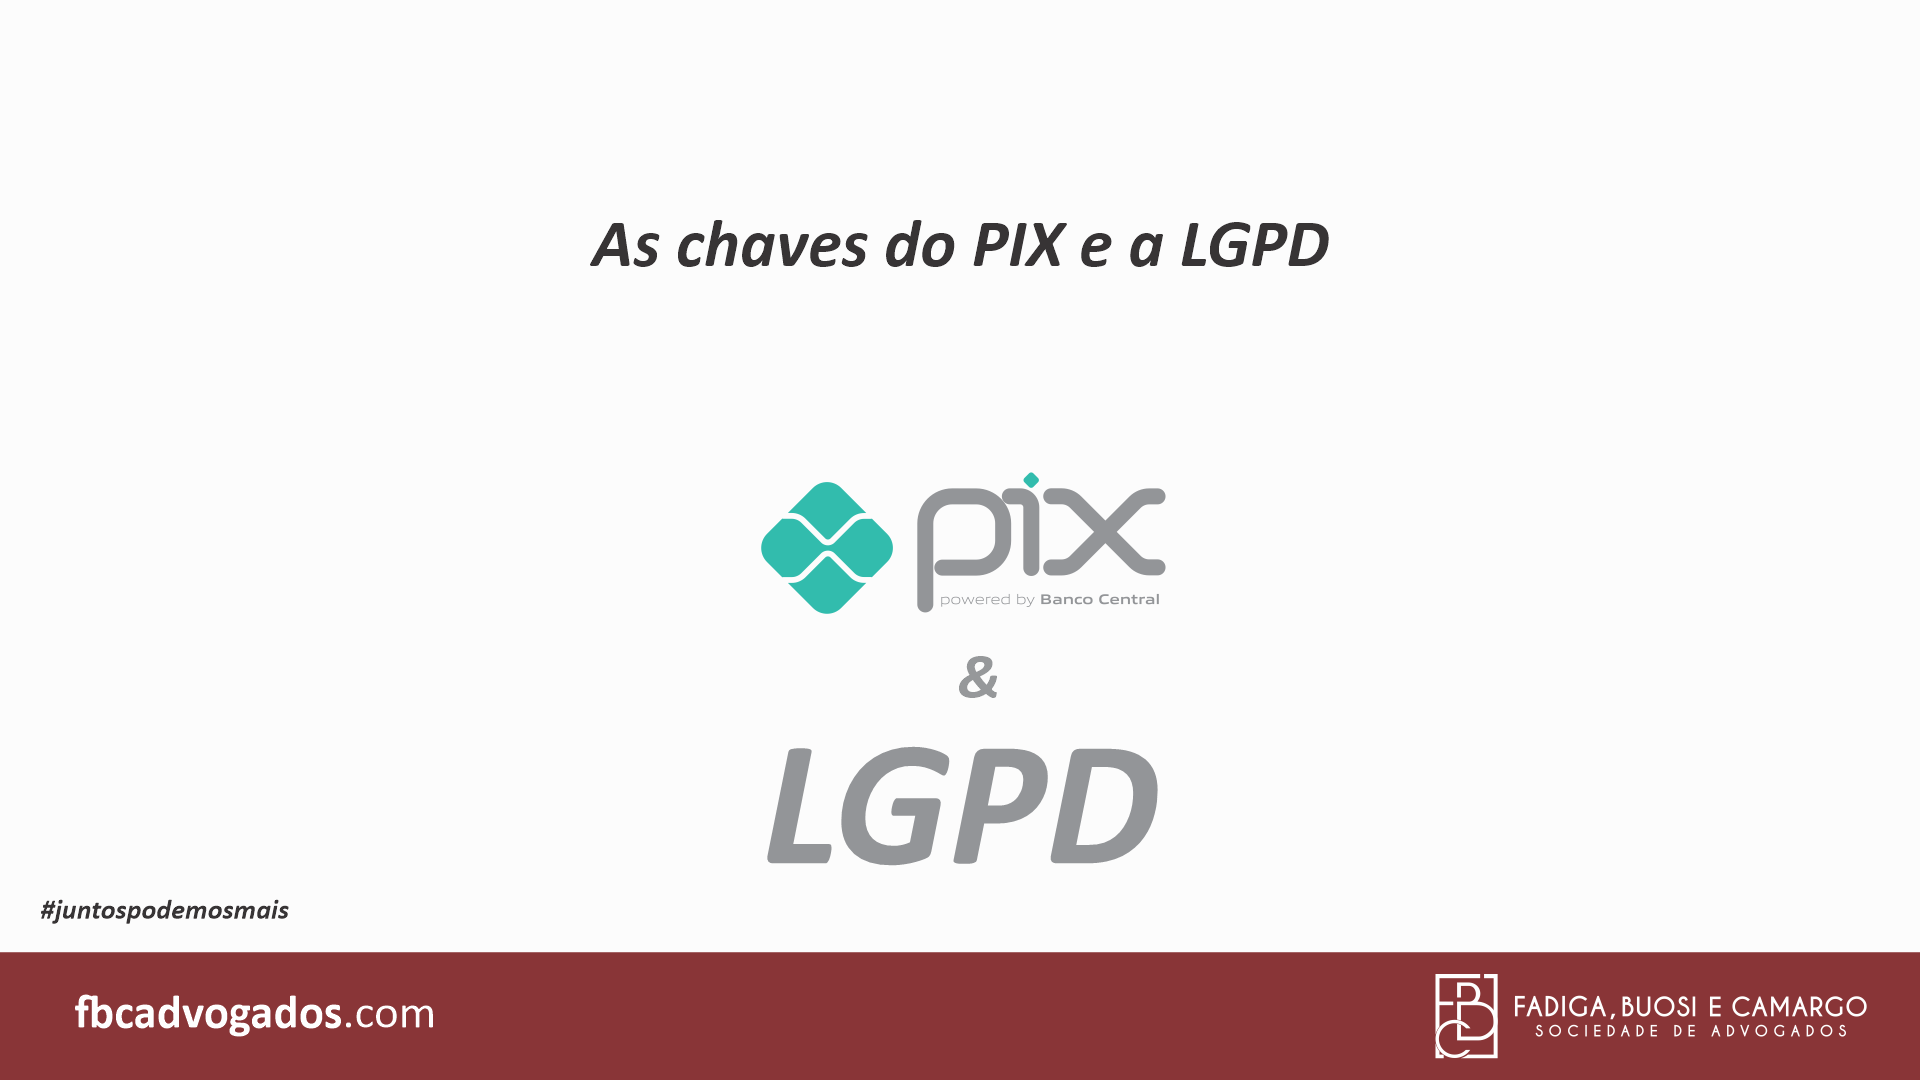 As chaves do PIX e a LGPD